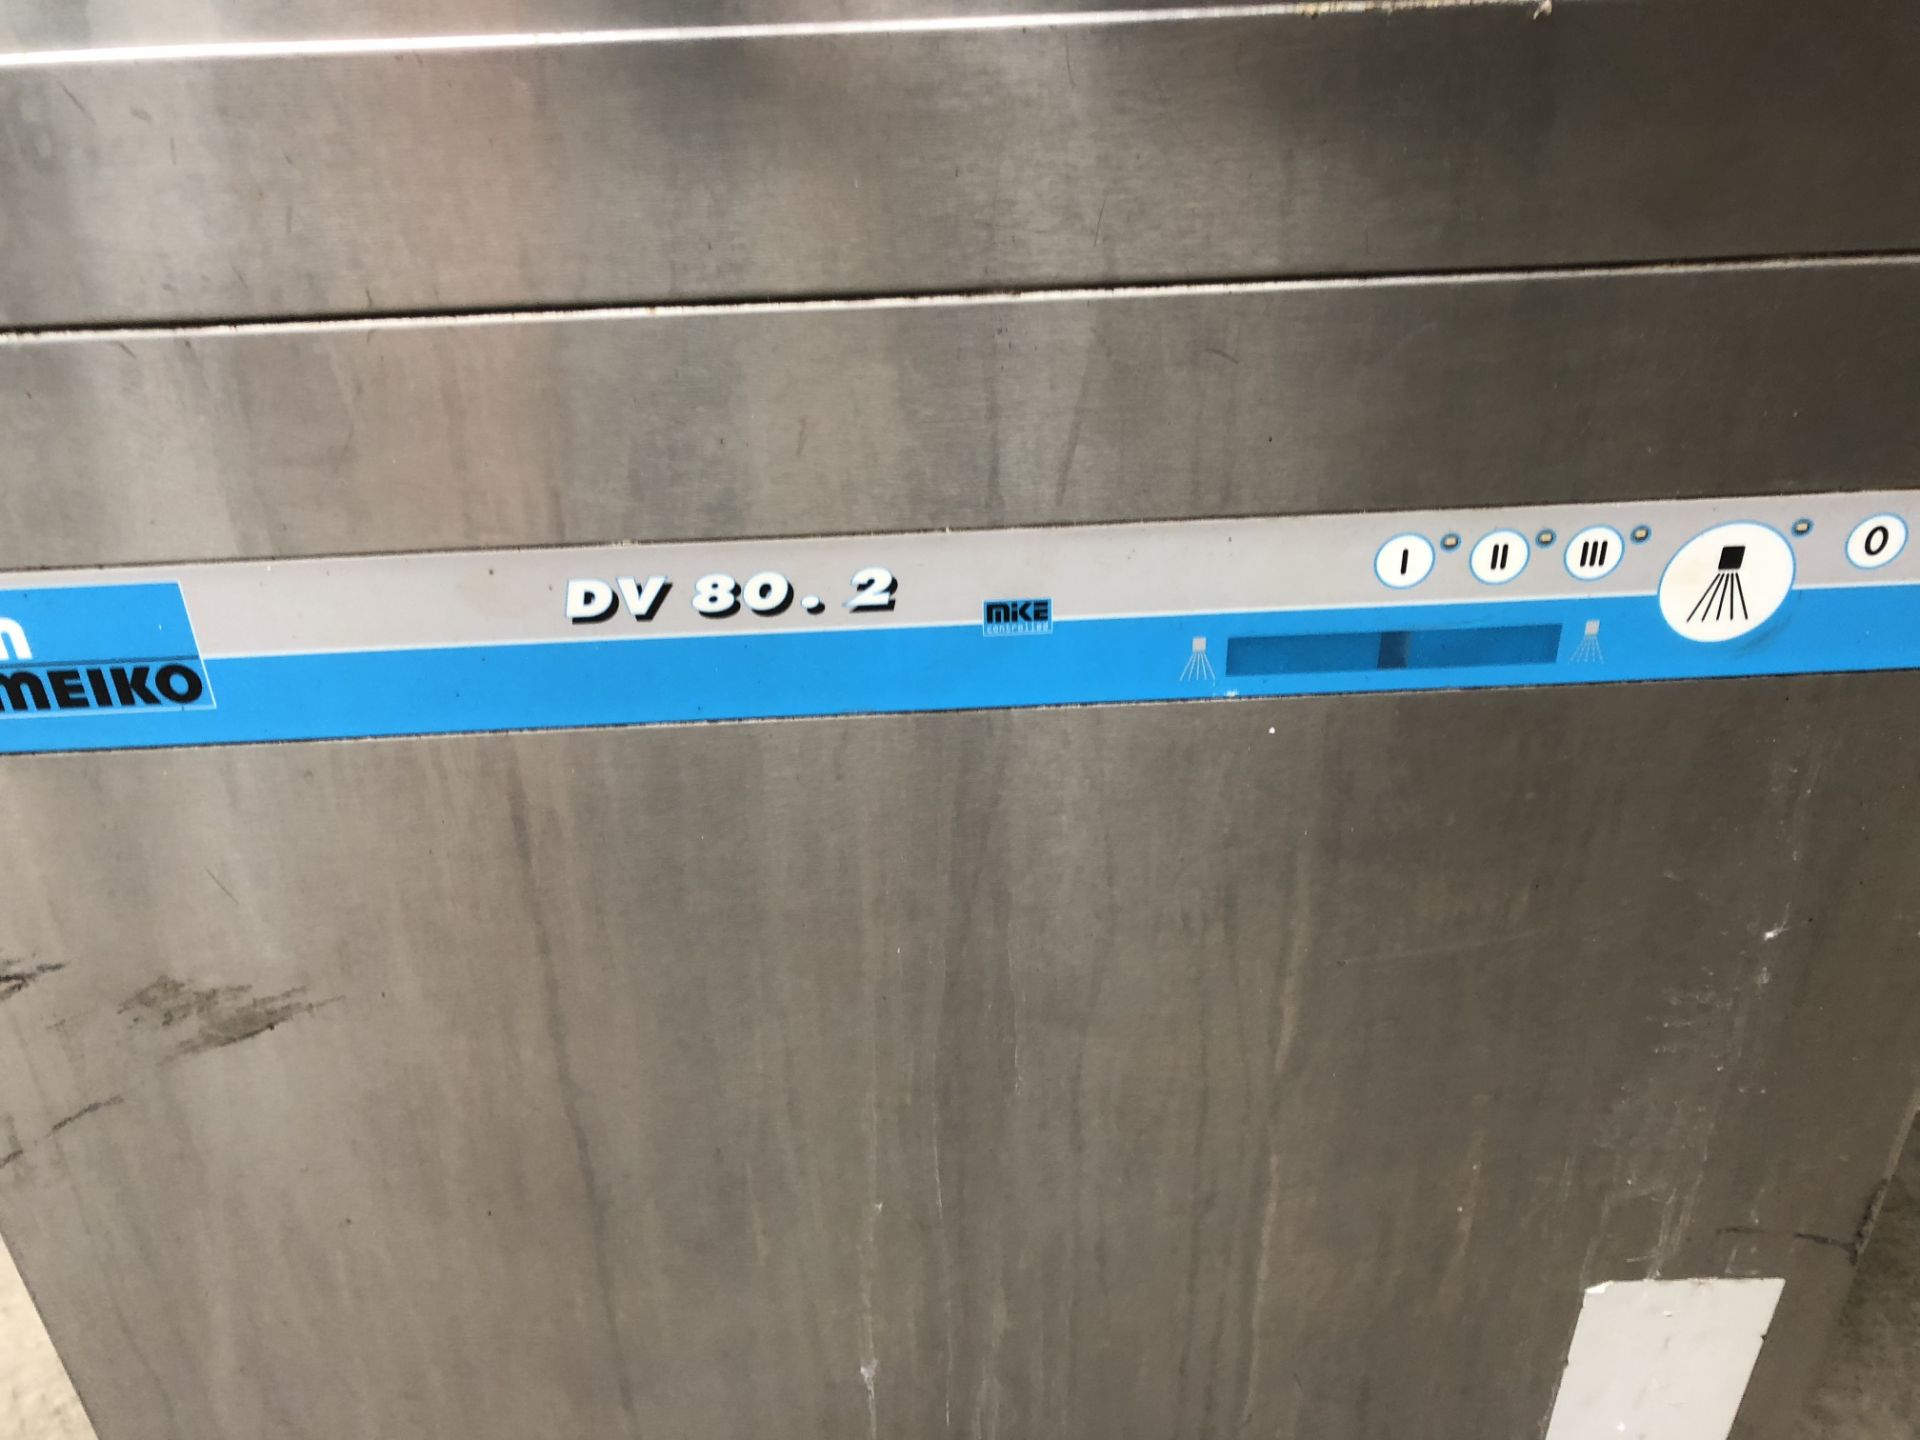 Meiko Pass Through Dishwasher - Image 2 of 4